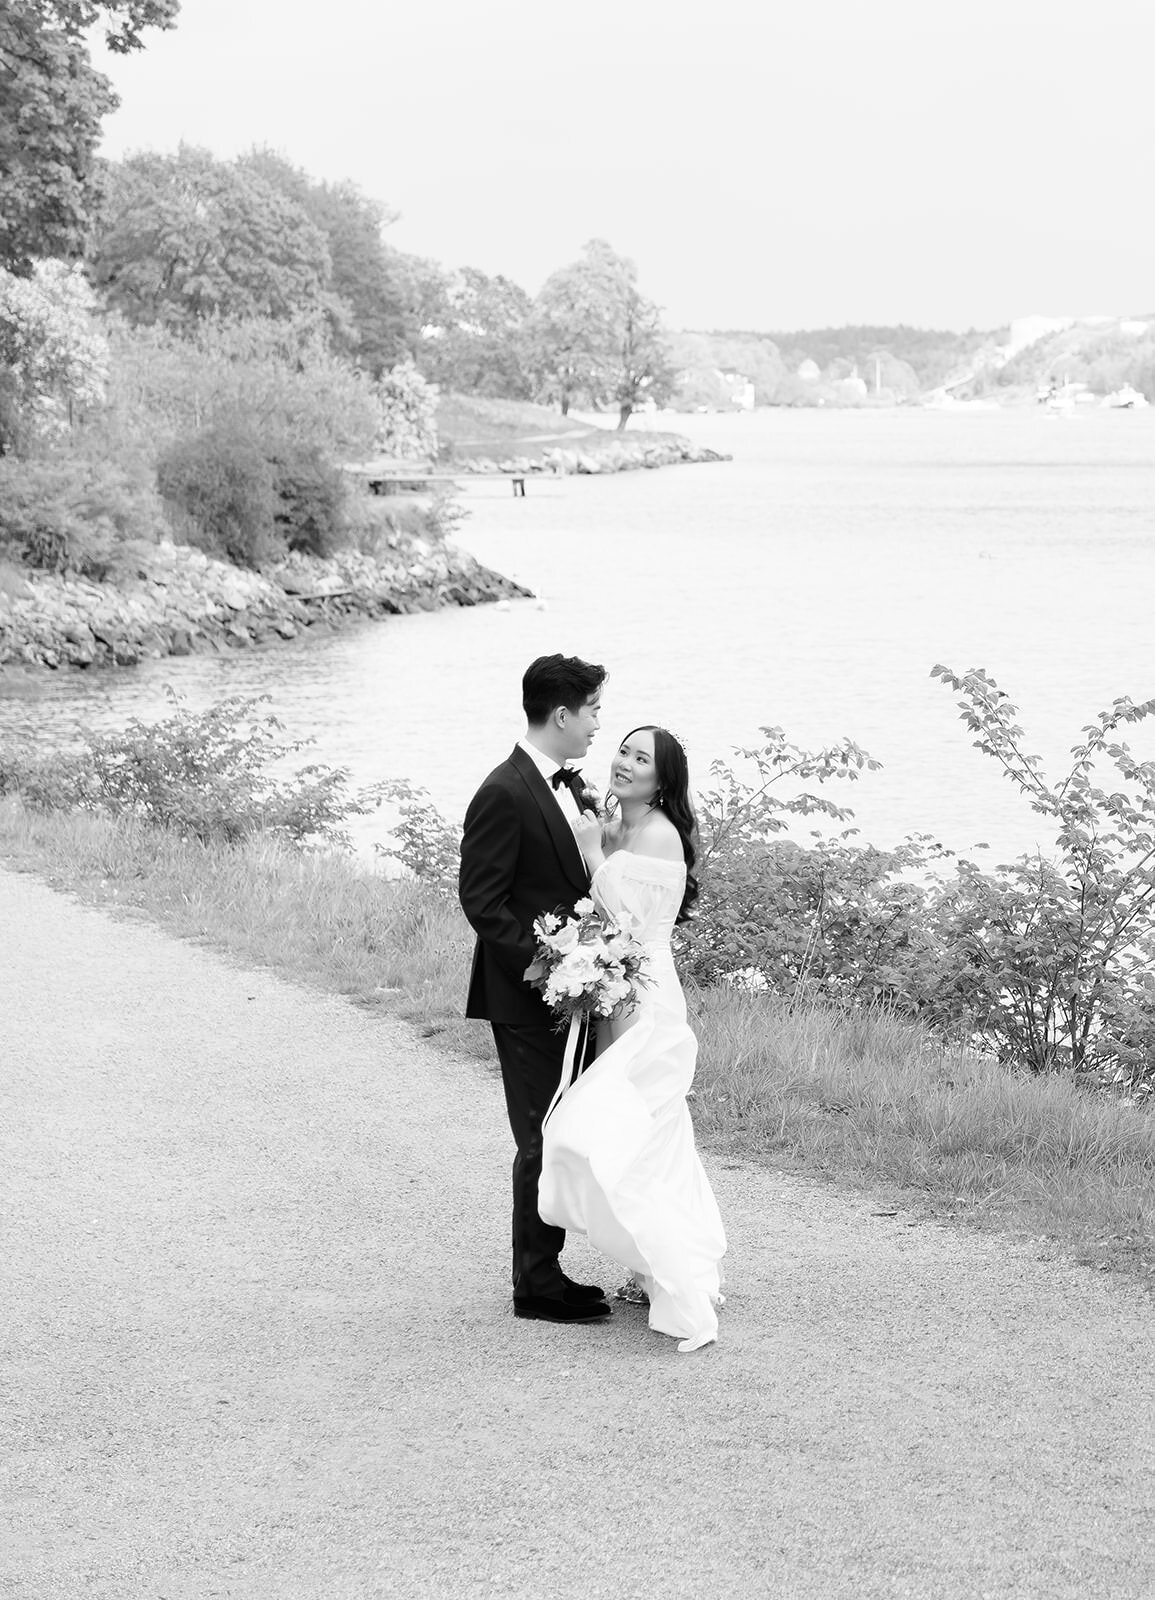 Wedding Photographer Anna Lundgren helloalora Wedding portraits at Waldemarsudde Royal Djurgården wedding at Solliden Skansen in Stockholm Sweden